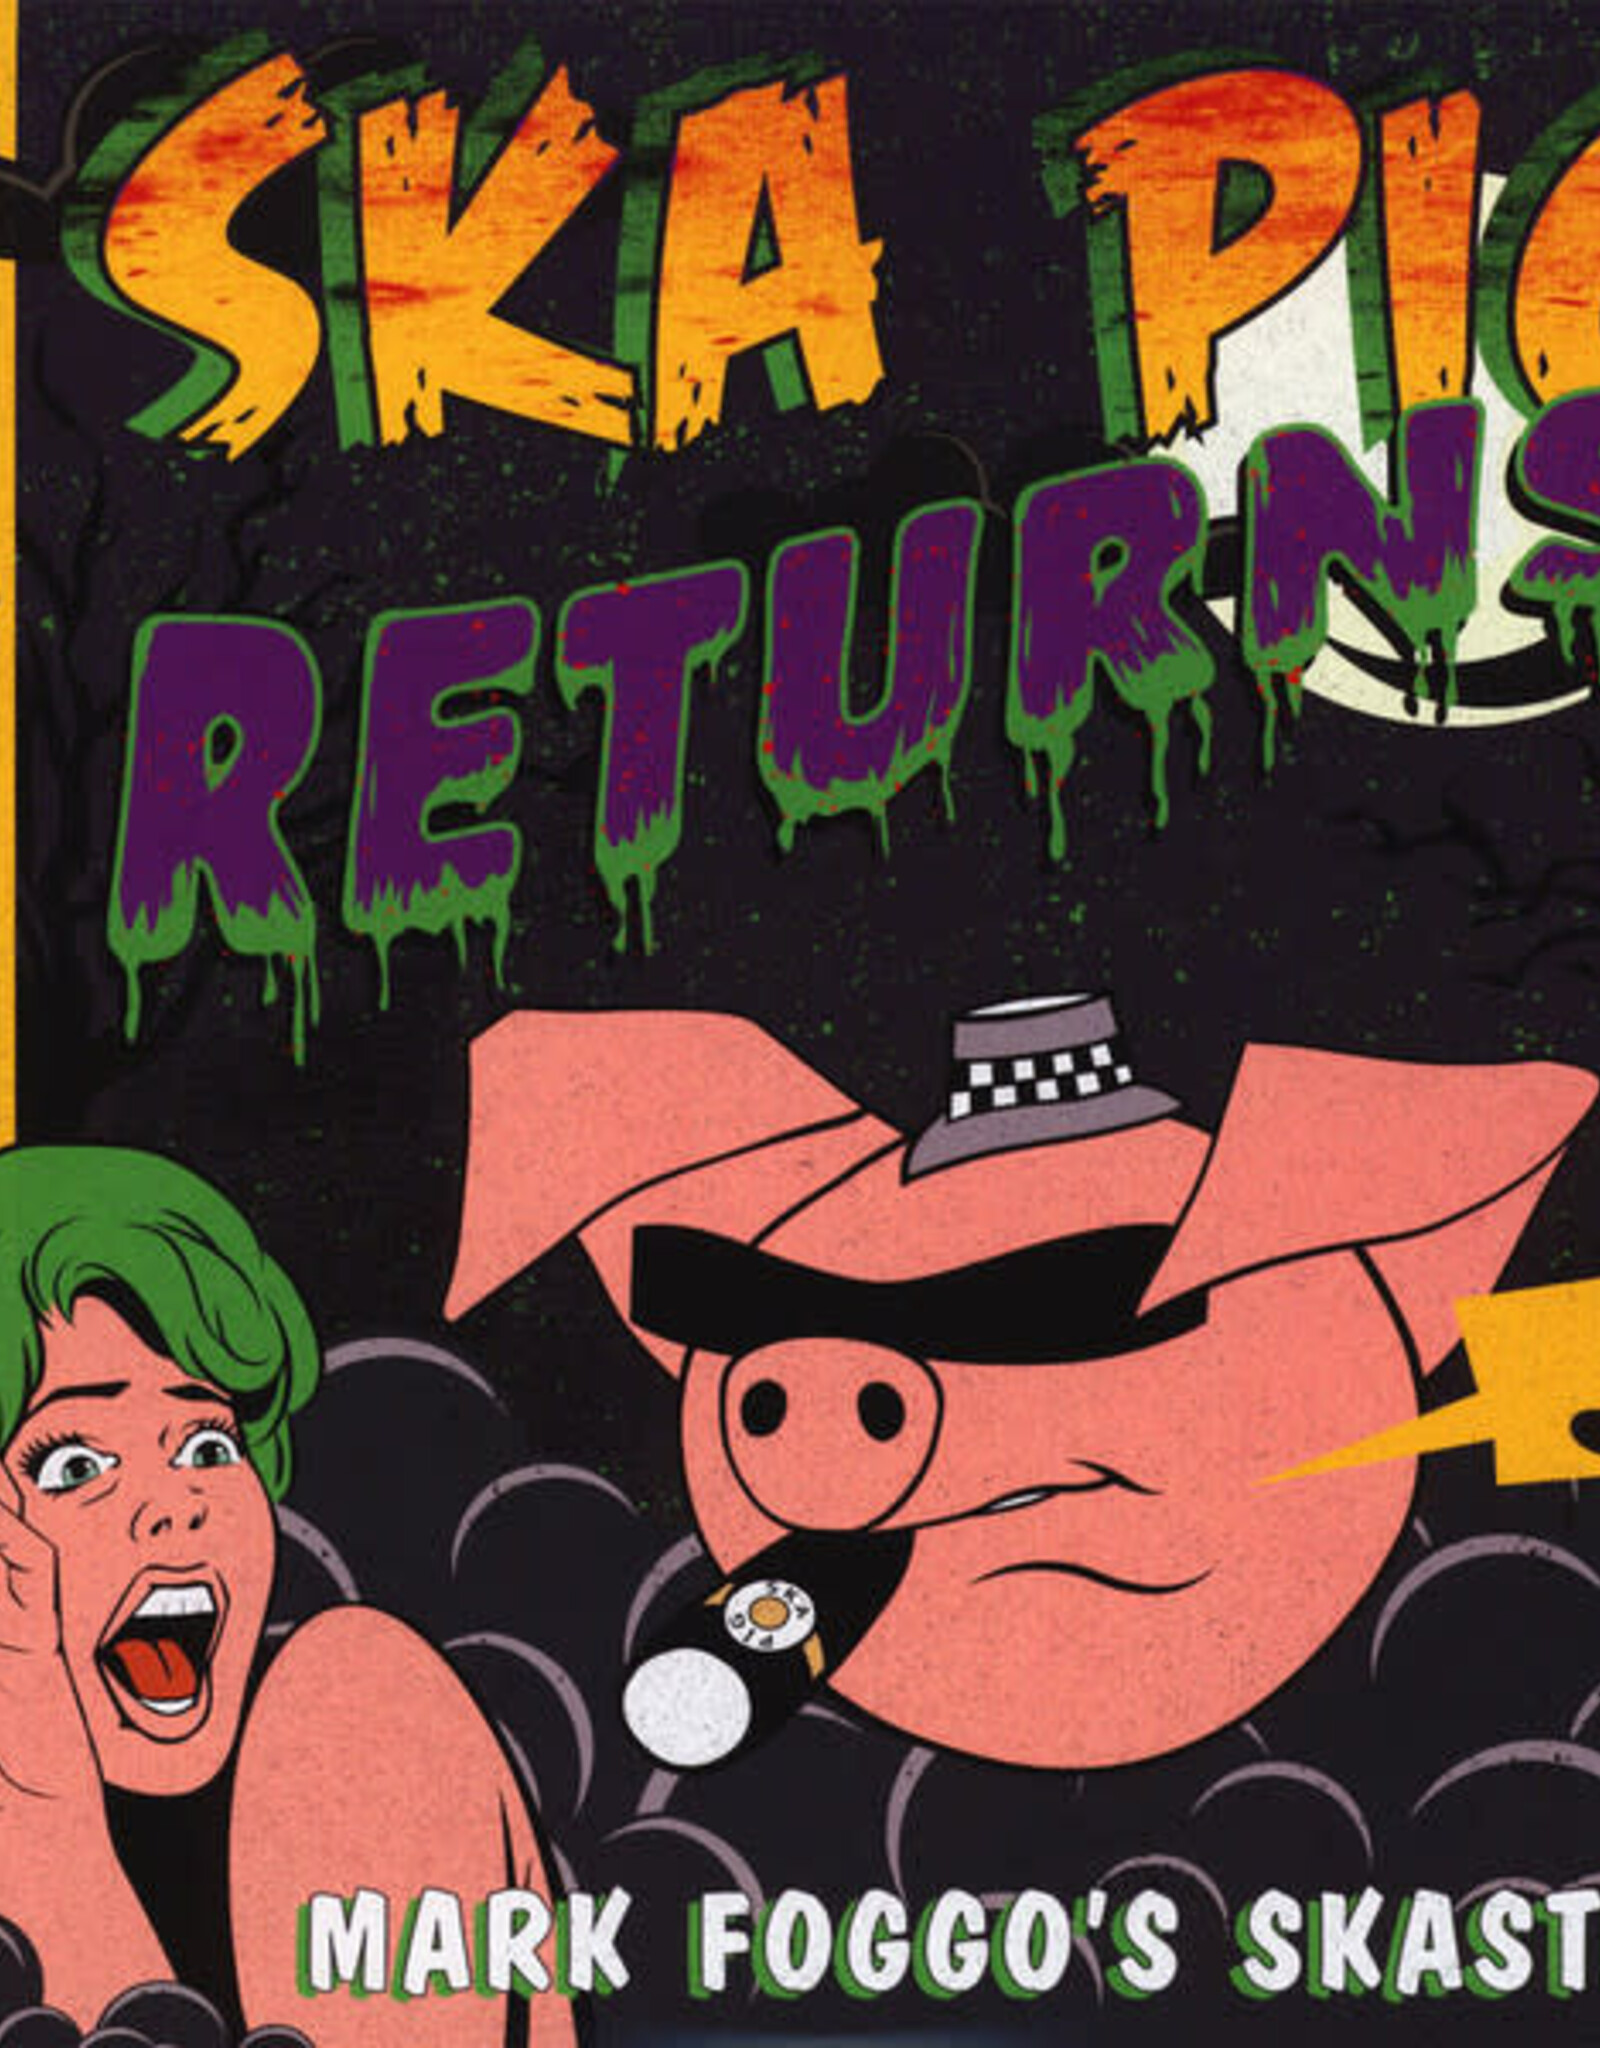 Mark Foggo's Skasters – Ska Pig Returns!